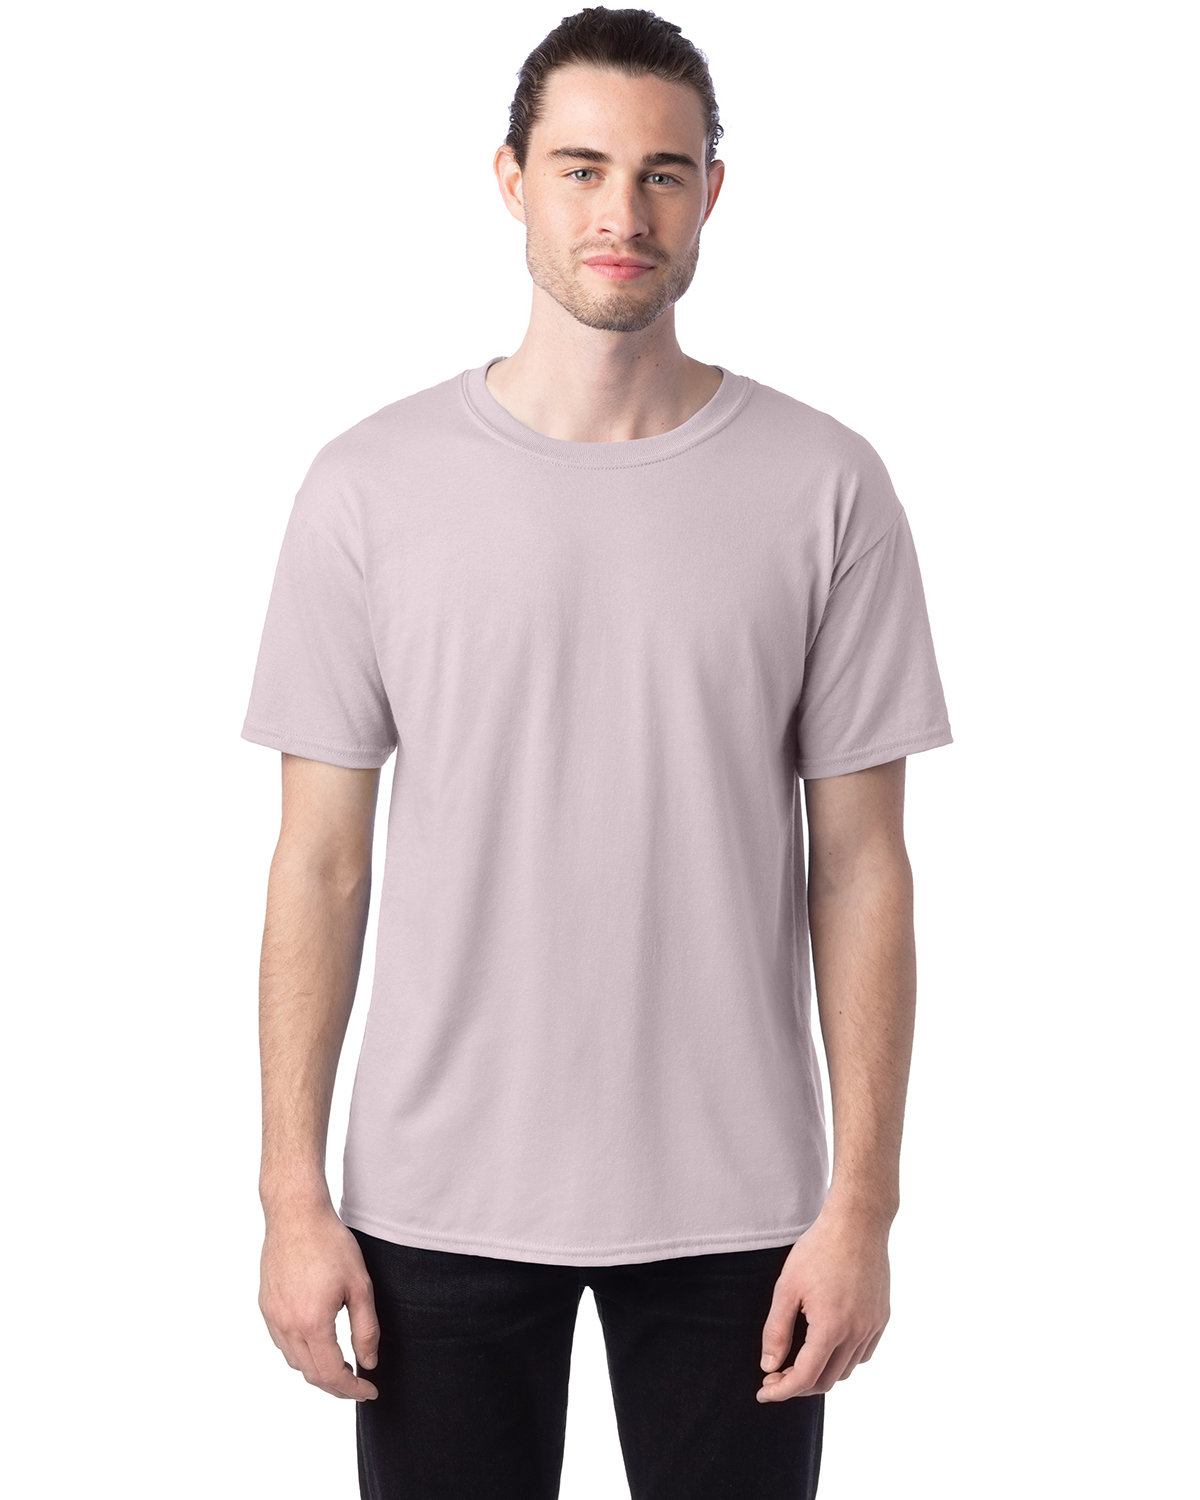 Hanes Unisex 50/50 T-Shirt PALE PINK 